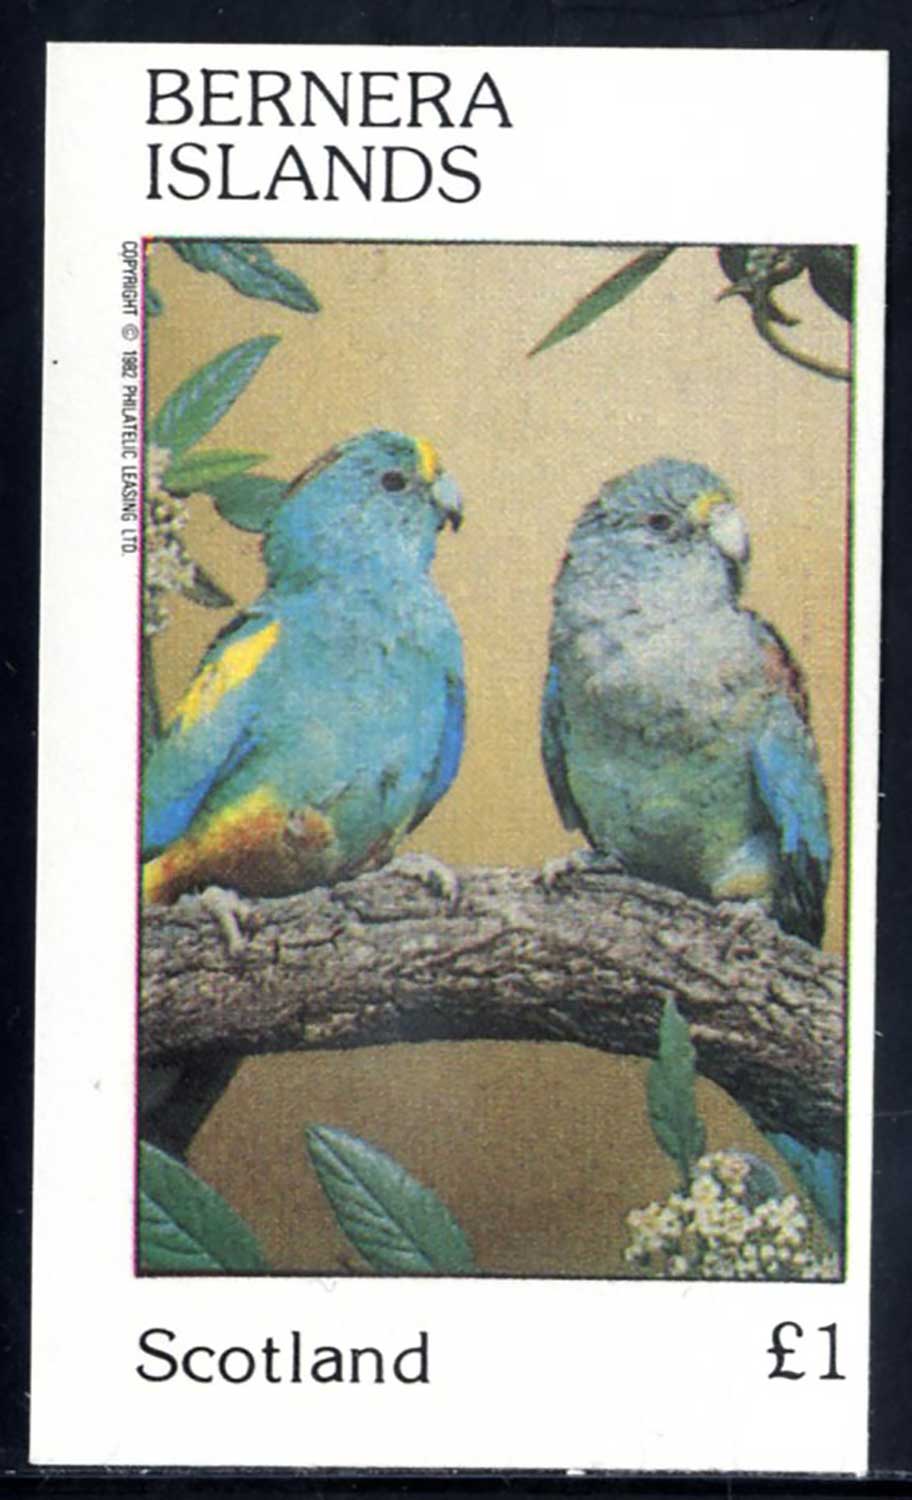 Bernera Colorful Parakeets £1